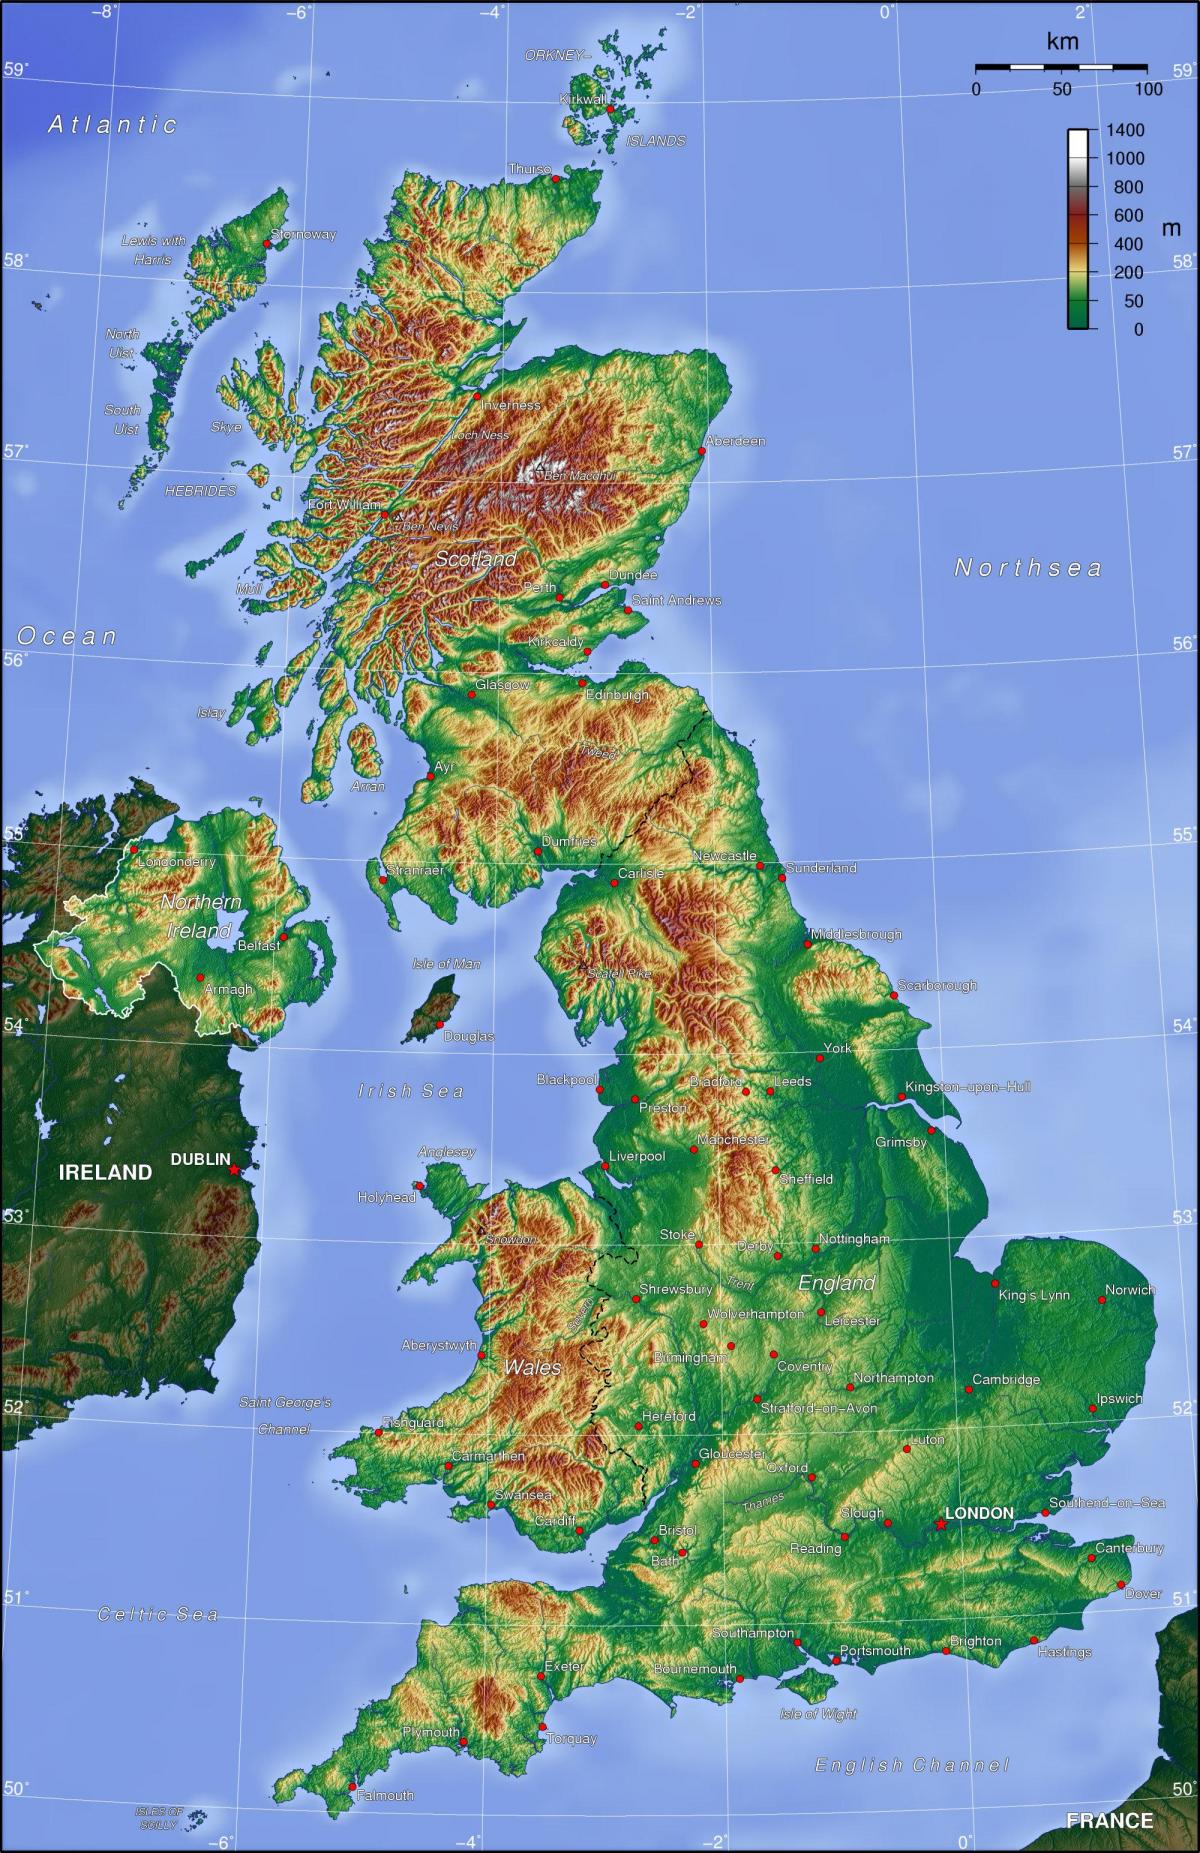 Mapa topográfico do Reino Unido (UK)